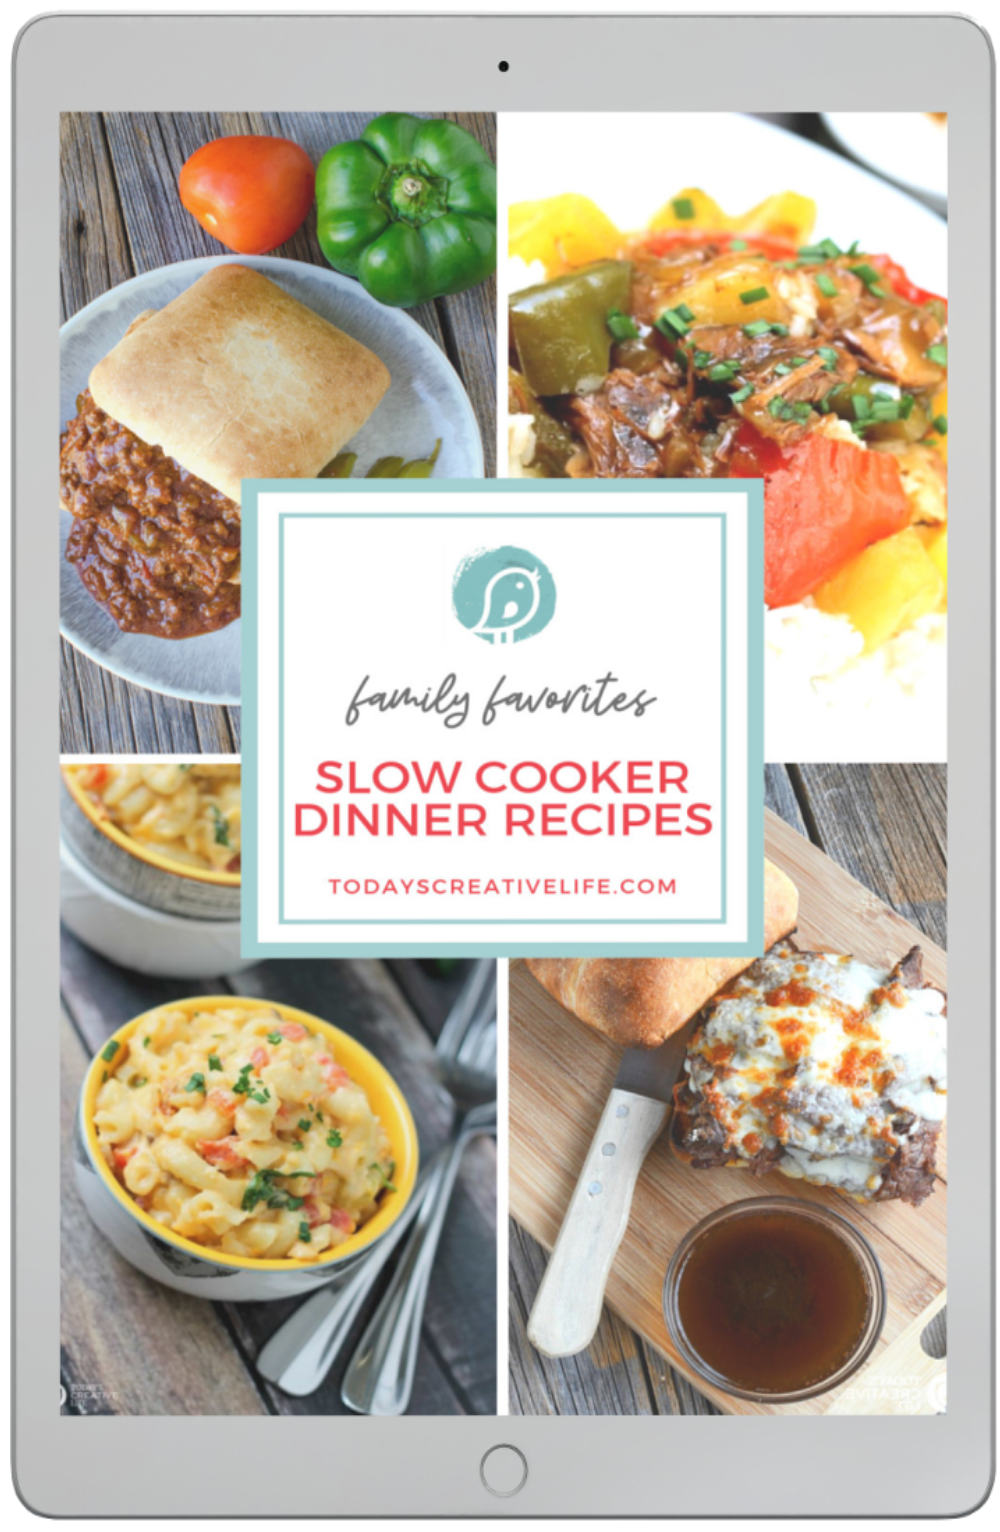 Slow cooker dinner recipes